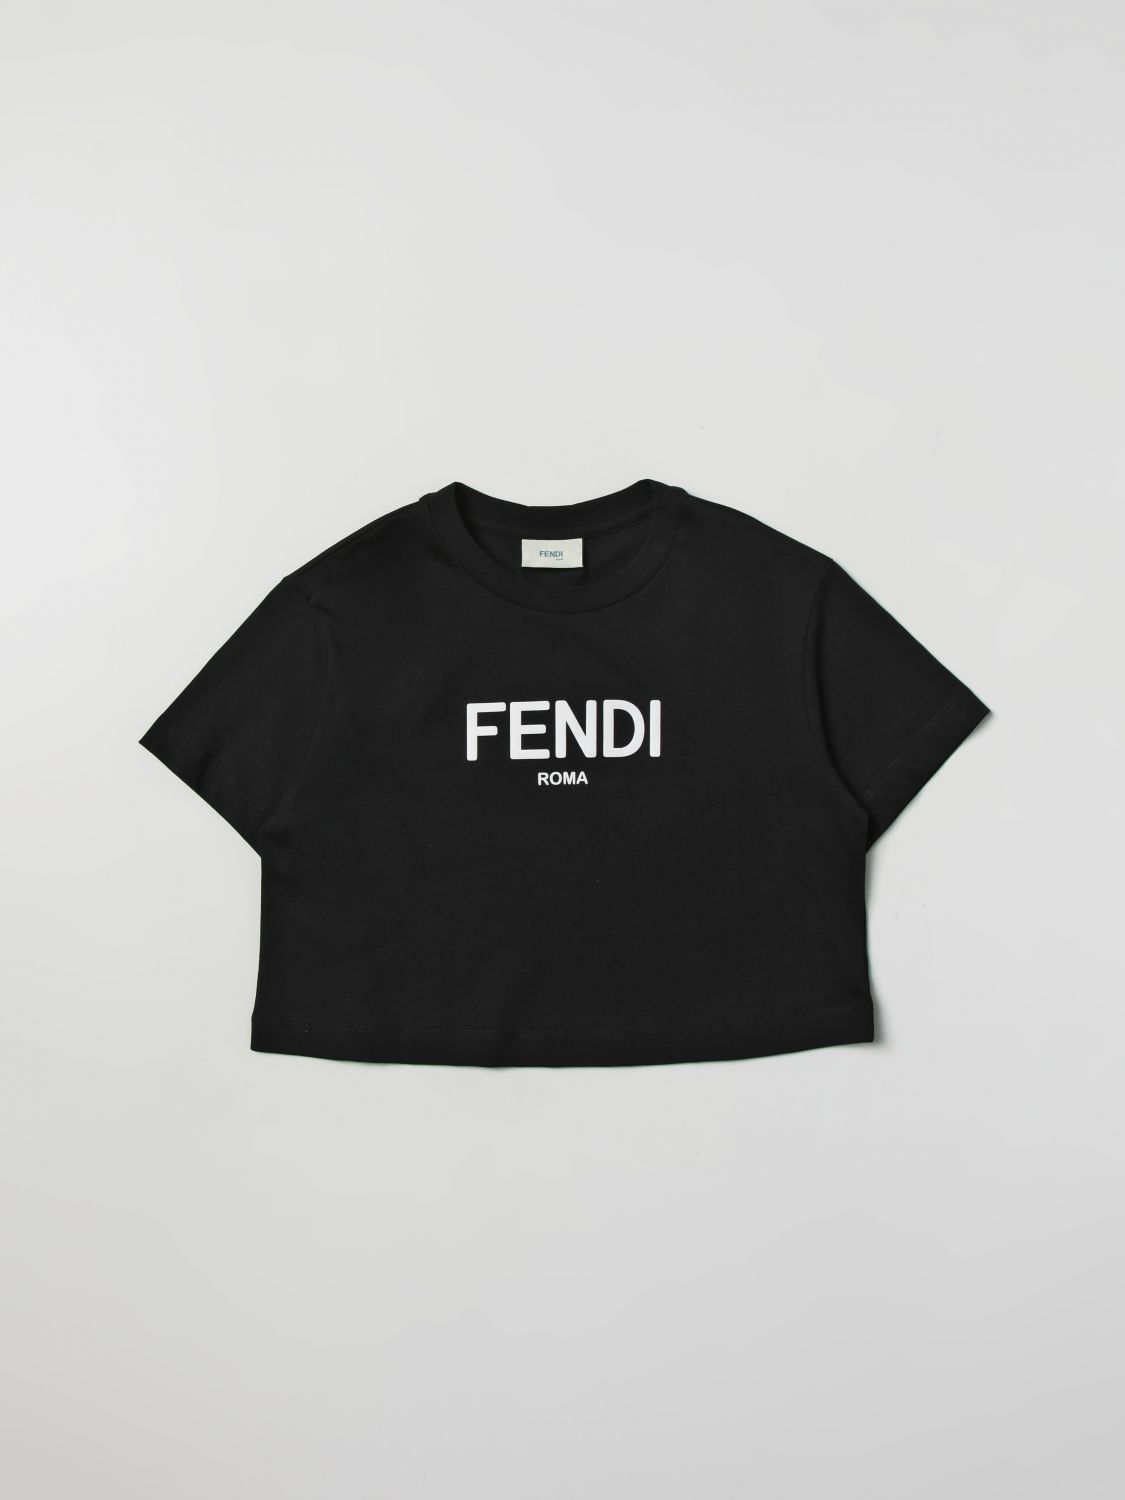 FENDI新作Tシャツ